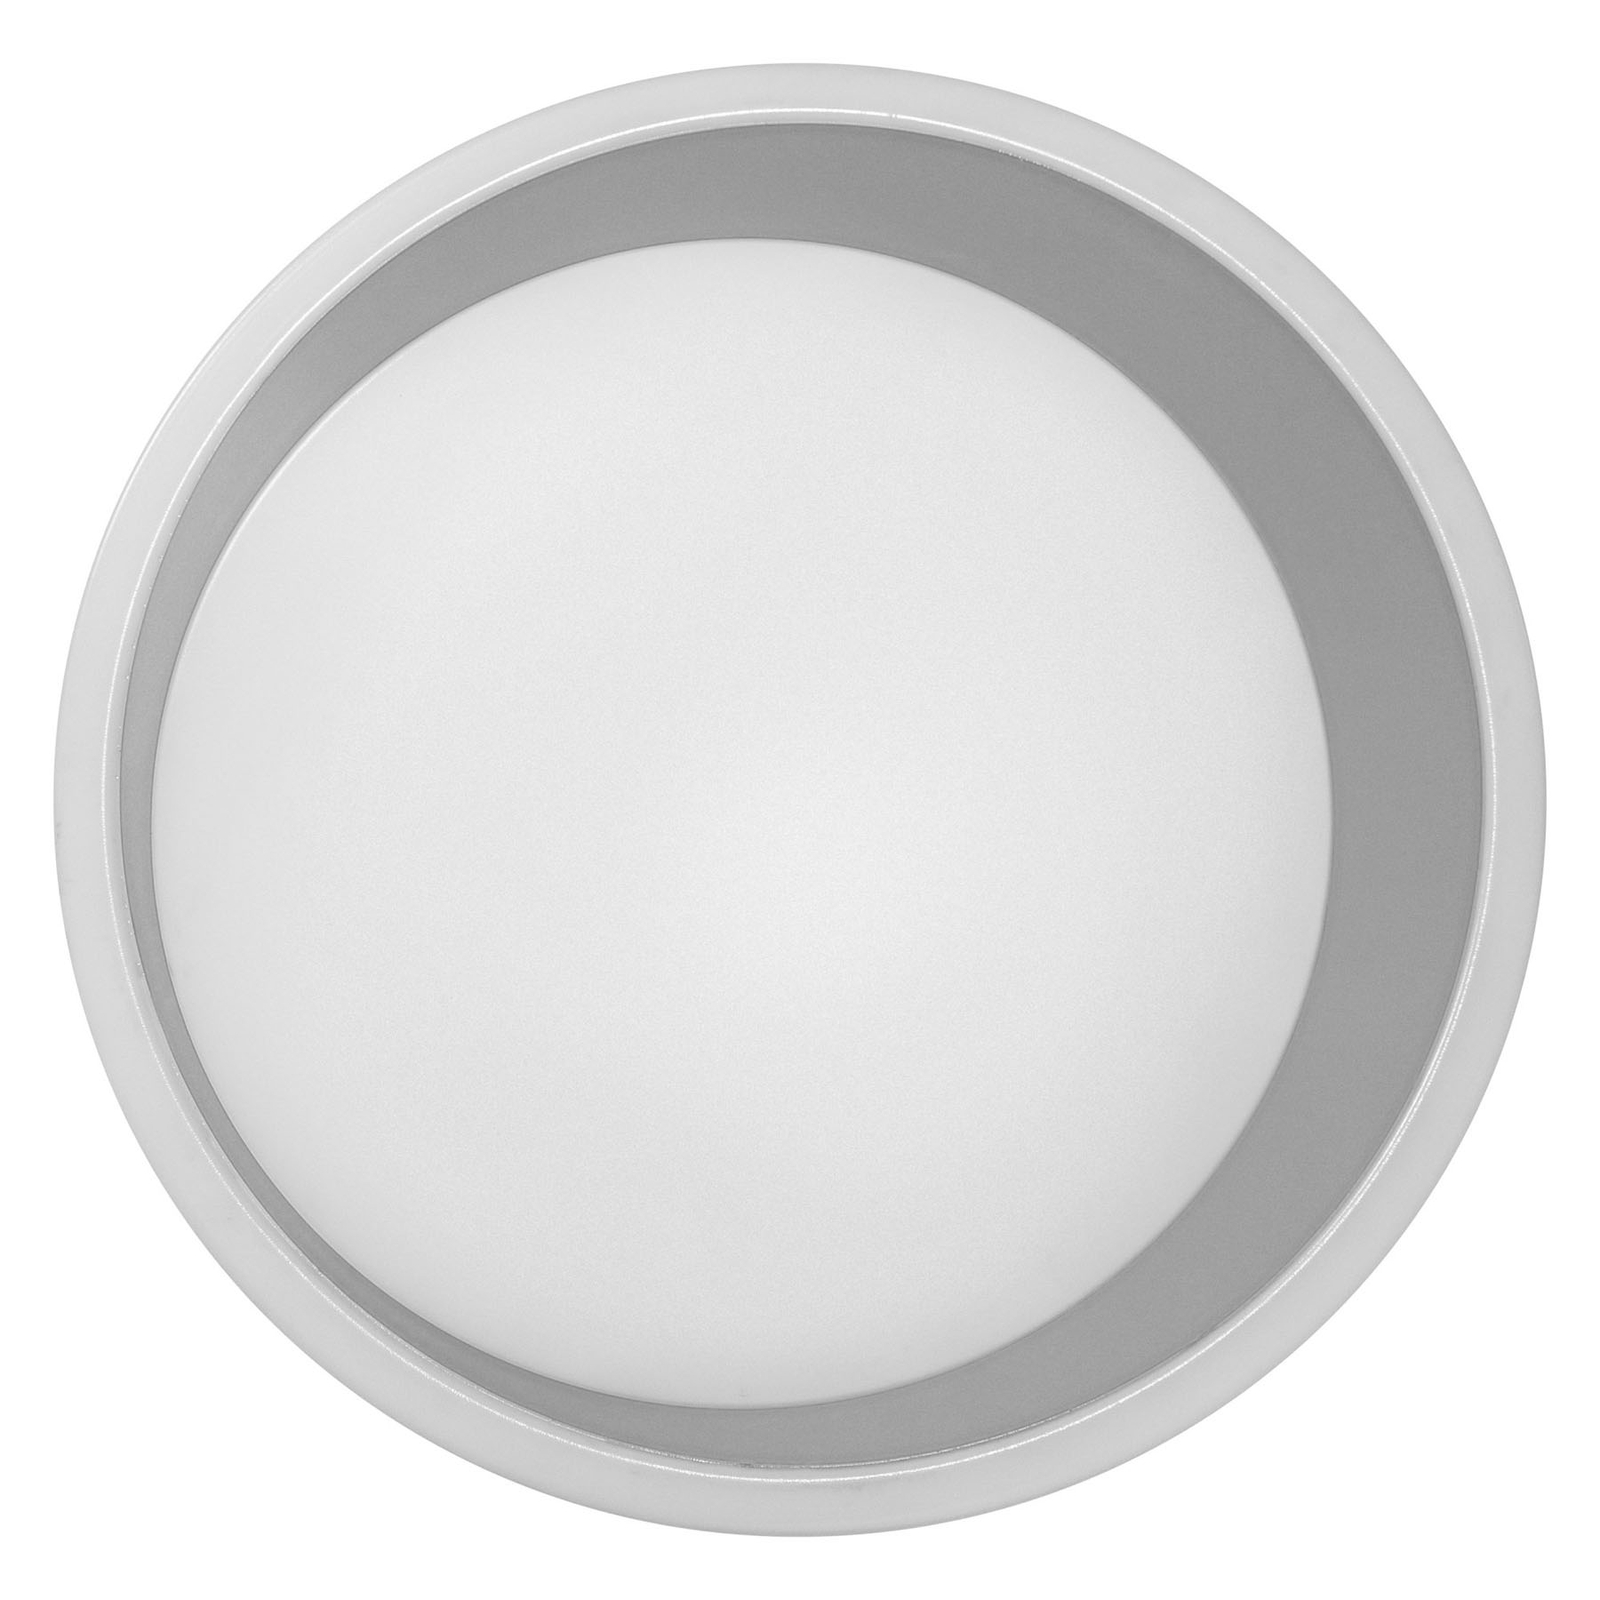 LEDVANCE SMART+ WiFi Orbis Moon CCT 48 cm grey